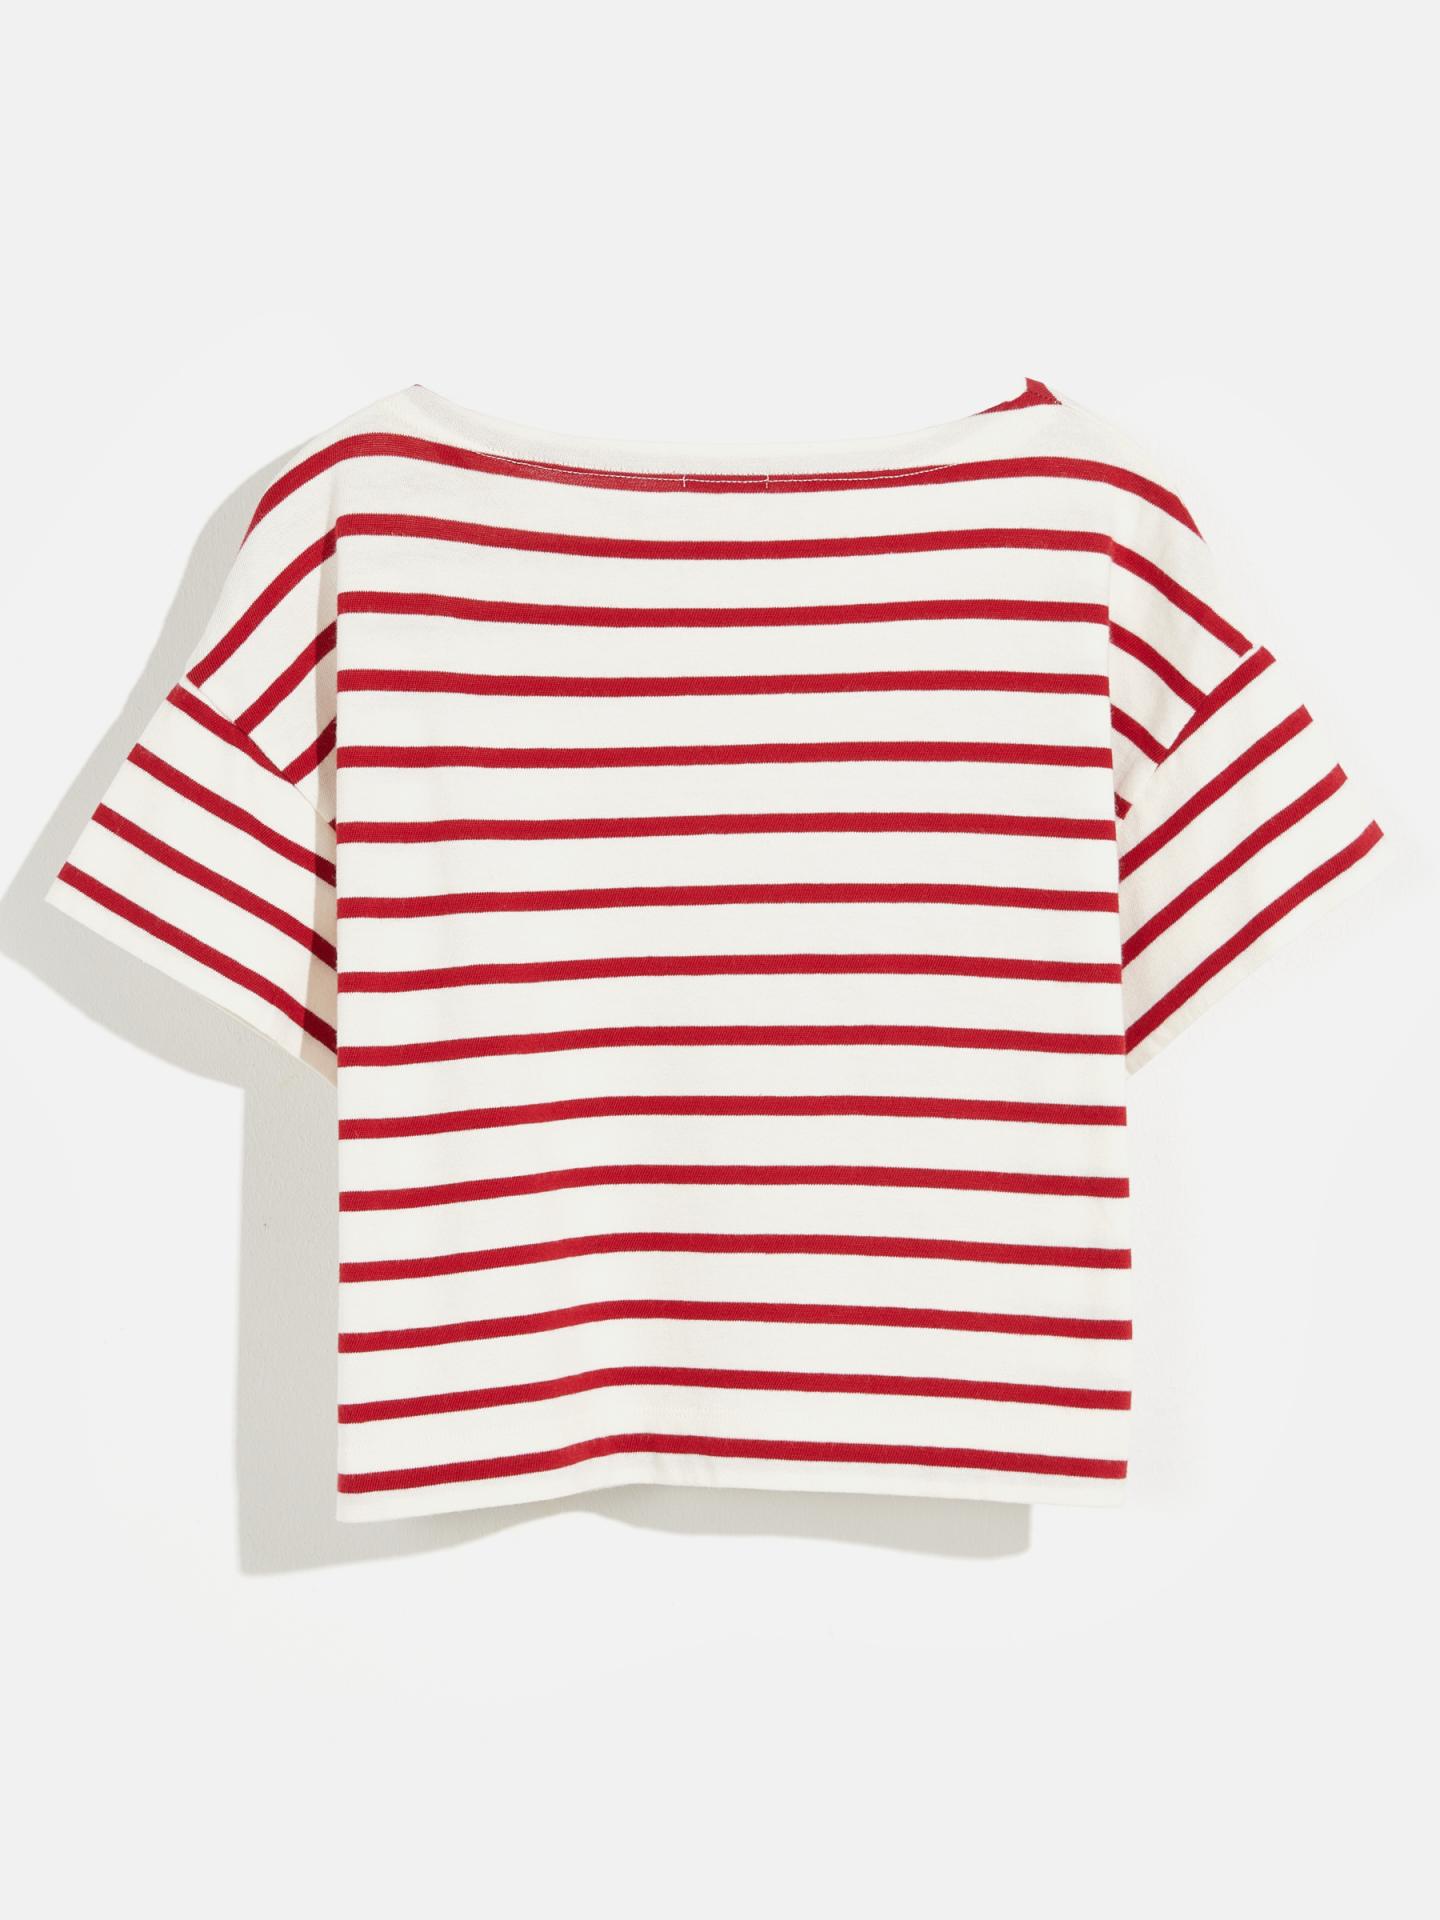 Bellerose,VASSY41,Camiseta rayas roja precios comprar Bellerose,VASSY41,Camiseta  rayas roja precio barato